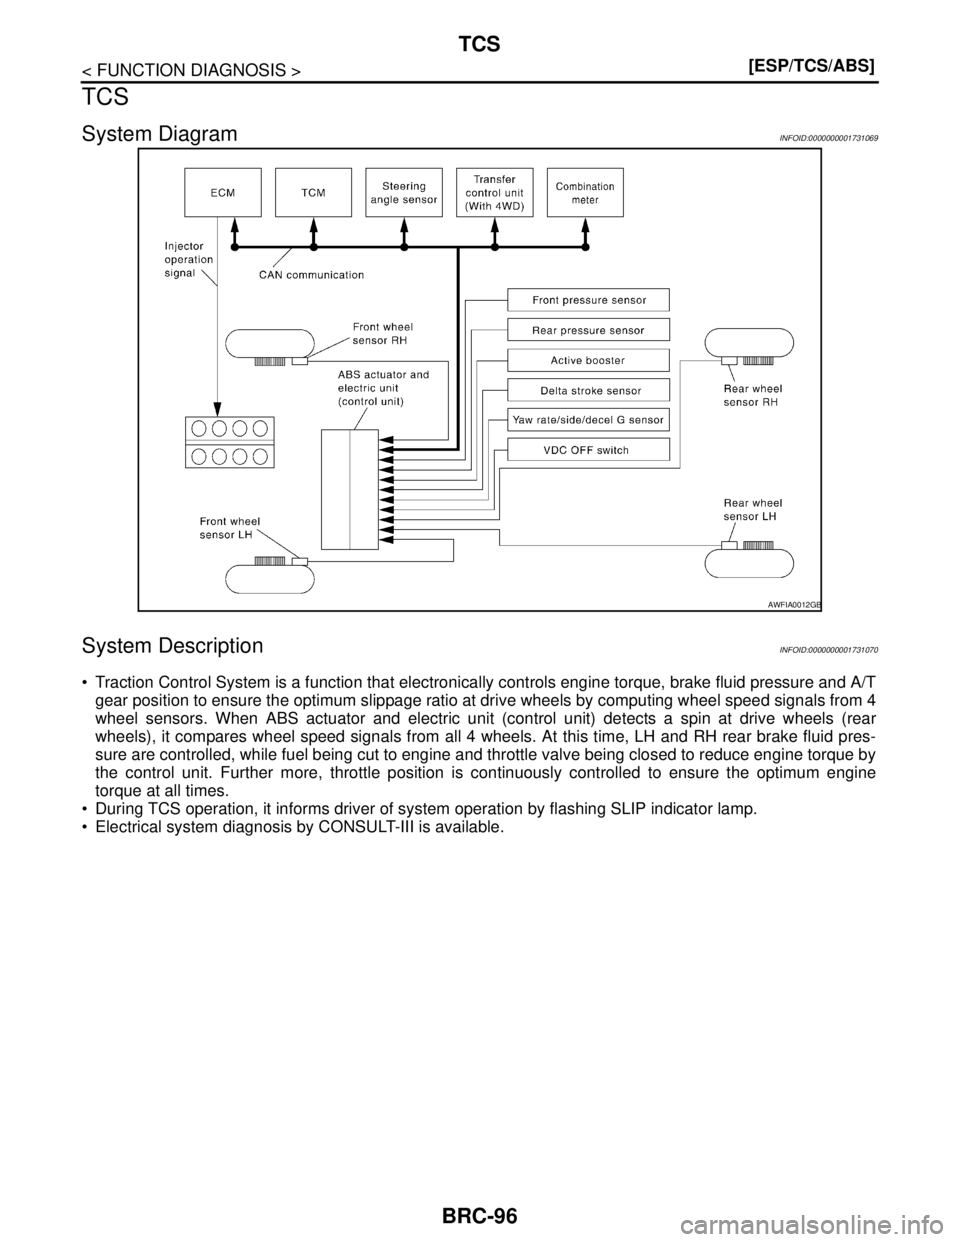 NISSAN TIIDA 2007  Service Repair Manual BRC-96
< FUNCTION DIAGNOSIS >[ESP/TCS/ABS]
TCS
TCS
System DiagramINFOID:0000000001731069
System DescriptionINFOID:0000000001731070
 Traction Control System is a function that electronically controls 